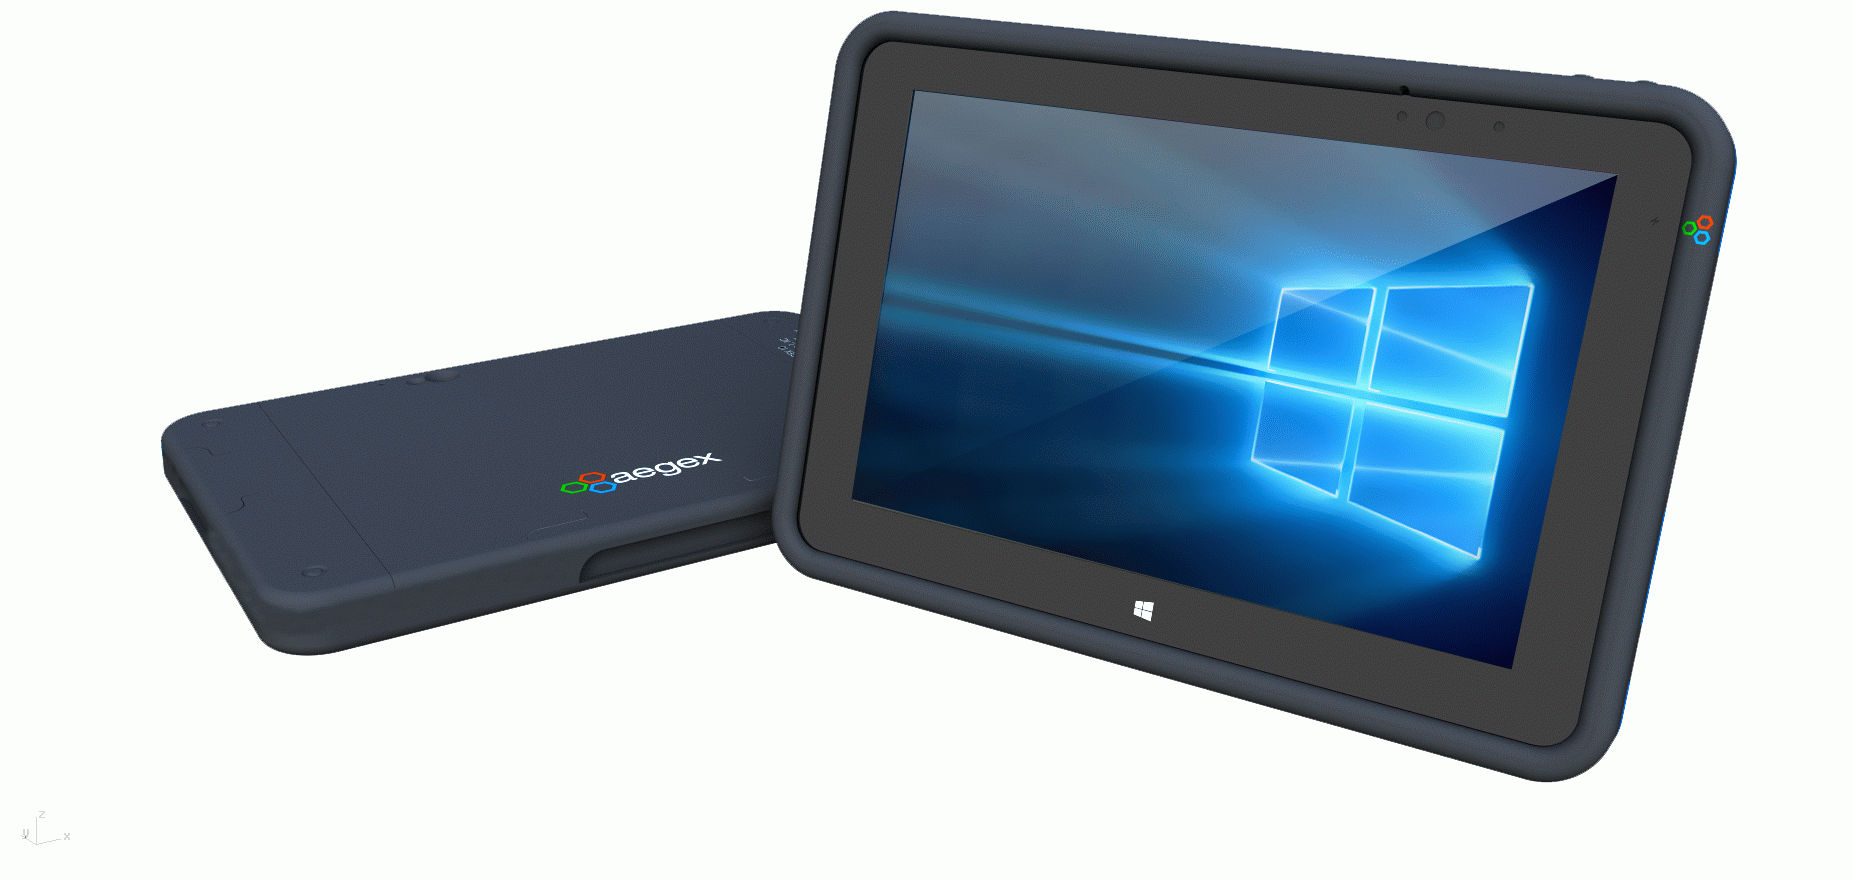 World’s First Intrinsically Safe Windows 10 Tablet